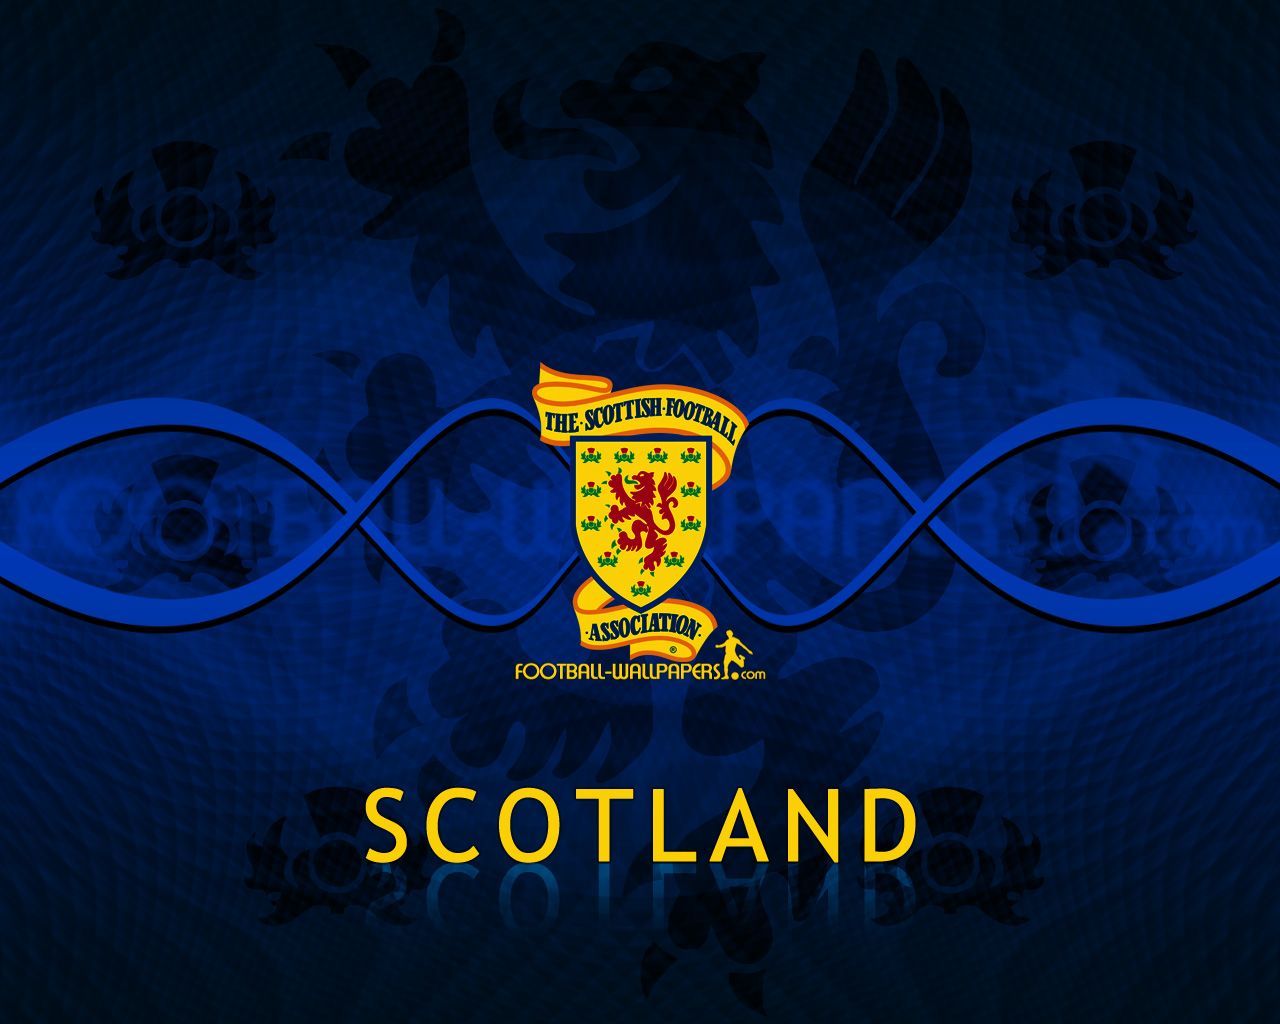 Scotland, Team wallpaper, Scotland wallpaper